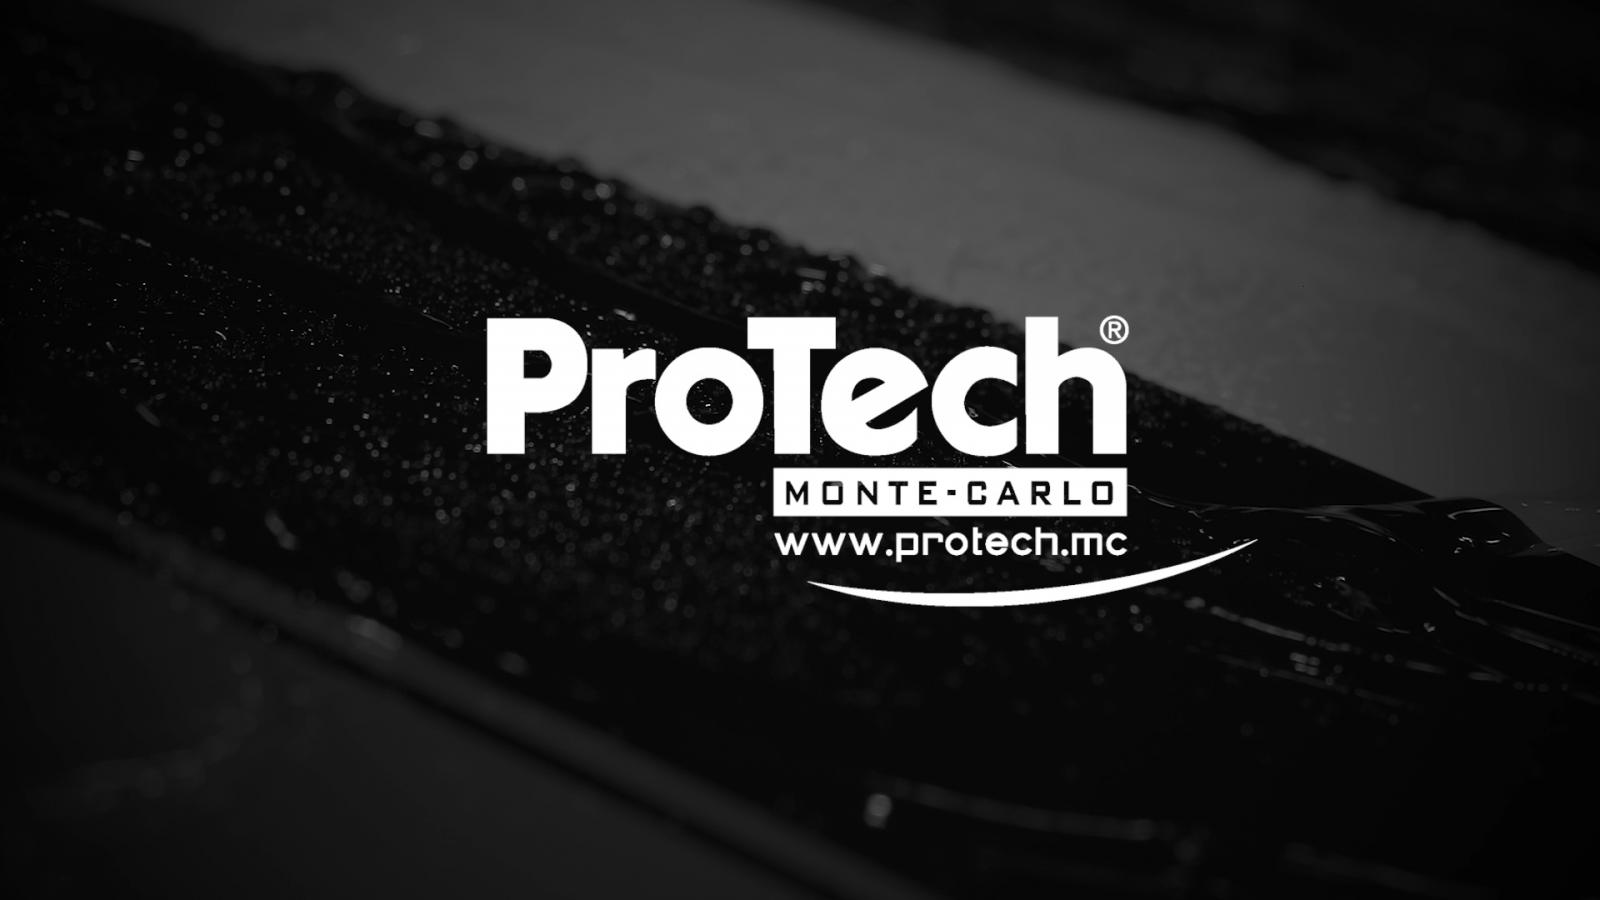 logo protech monte carlo website www.protech.mc